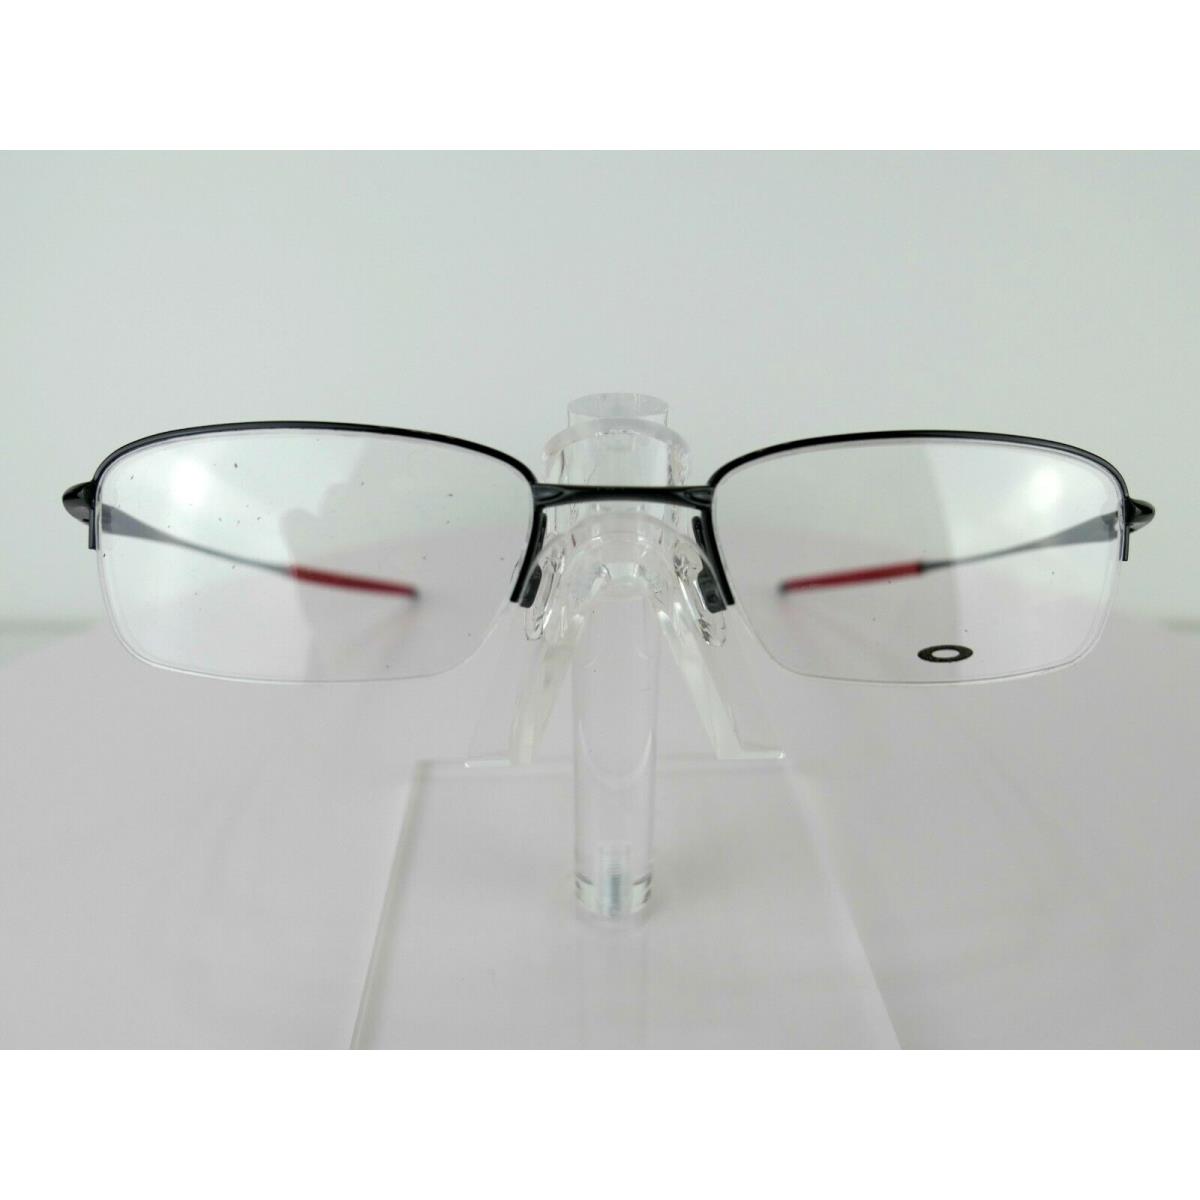 Oakley Top Spinner (51) OX 3133-0751 Top Spinner 51 OX 3133-0751 Pol Black / Red 51 x 19 Eyeglass Frames